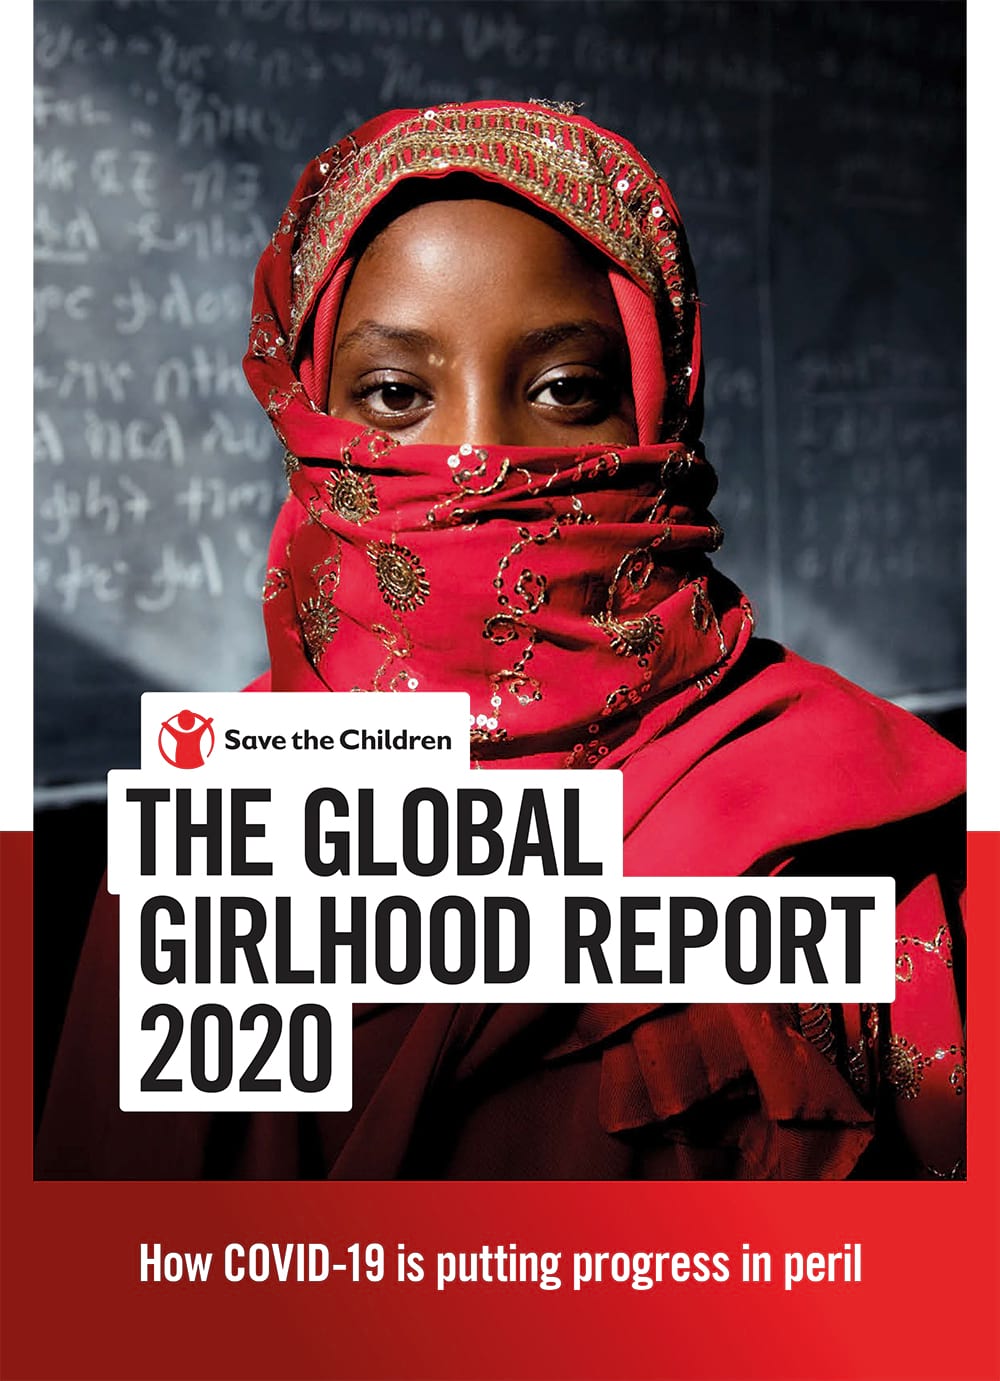 Save the Children’s 2020 Global Girlhood Report